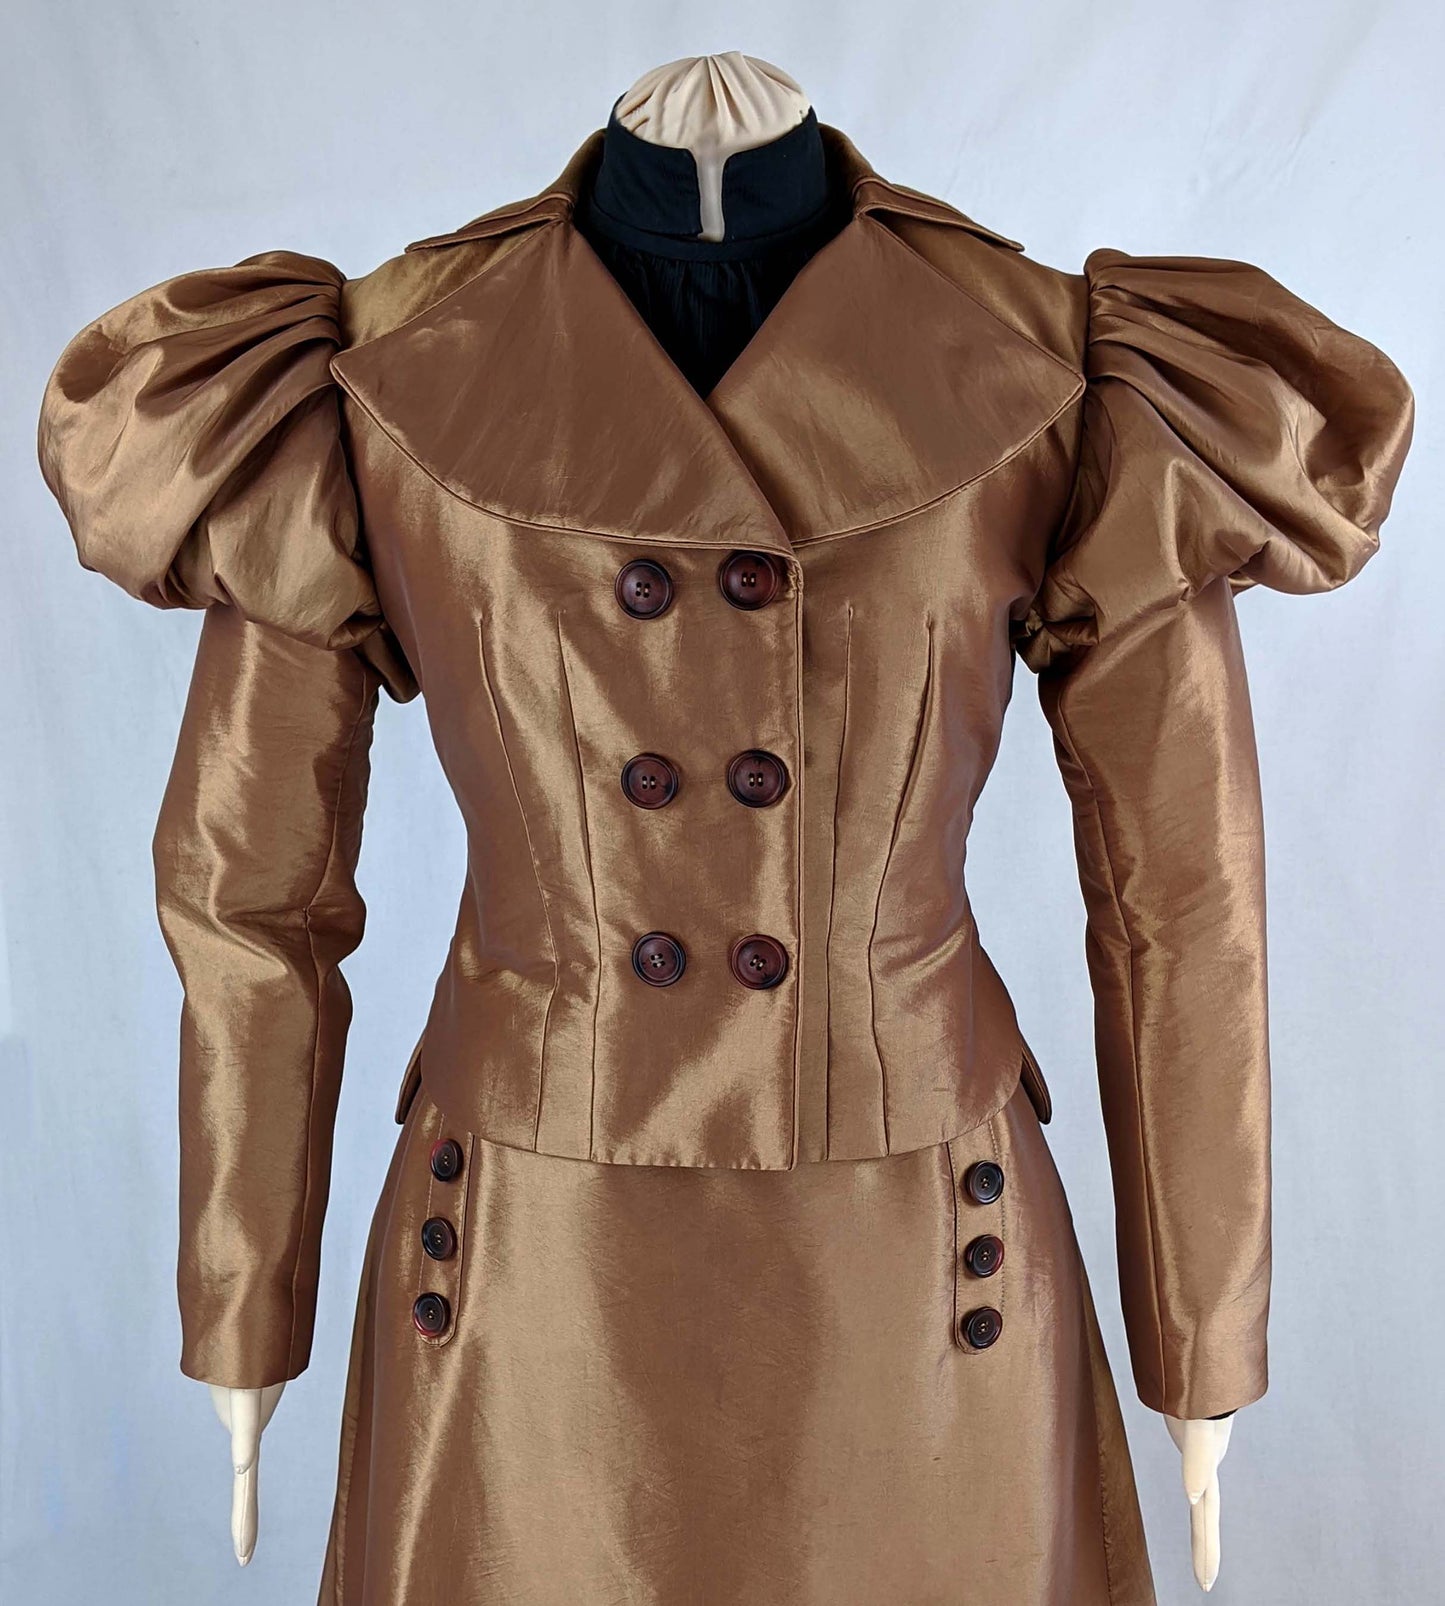 #0120 Edwardian Jacket with puff sleeves 1890 Sewing Pattern Size US 8-30 (EU 34-56) Printed Pattern